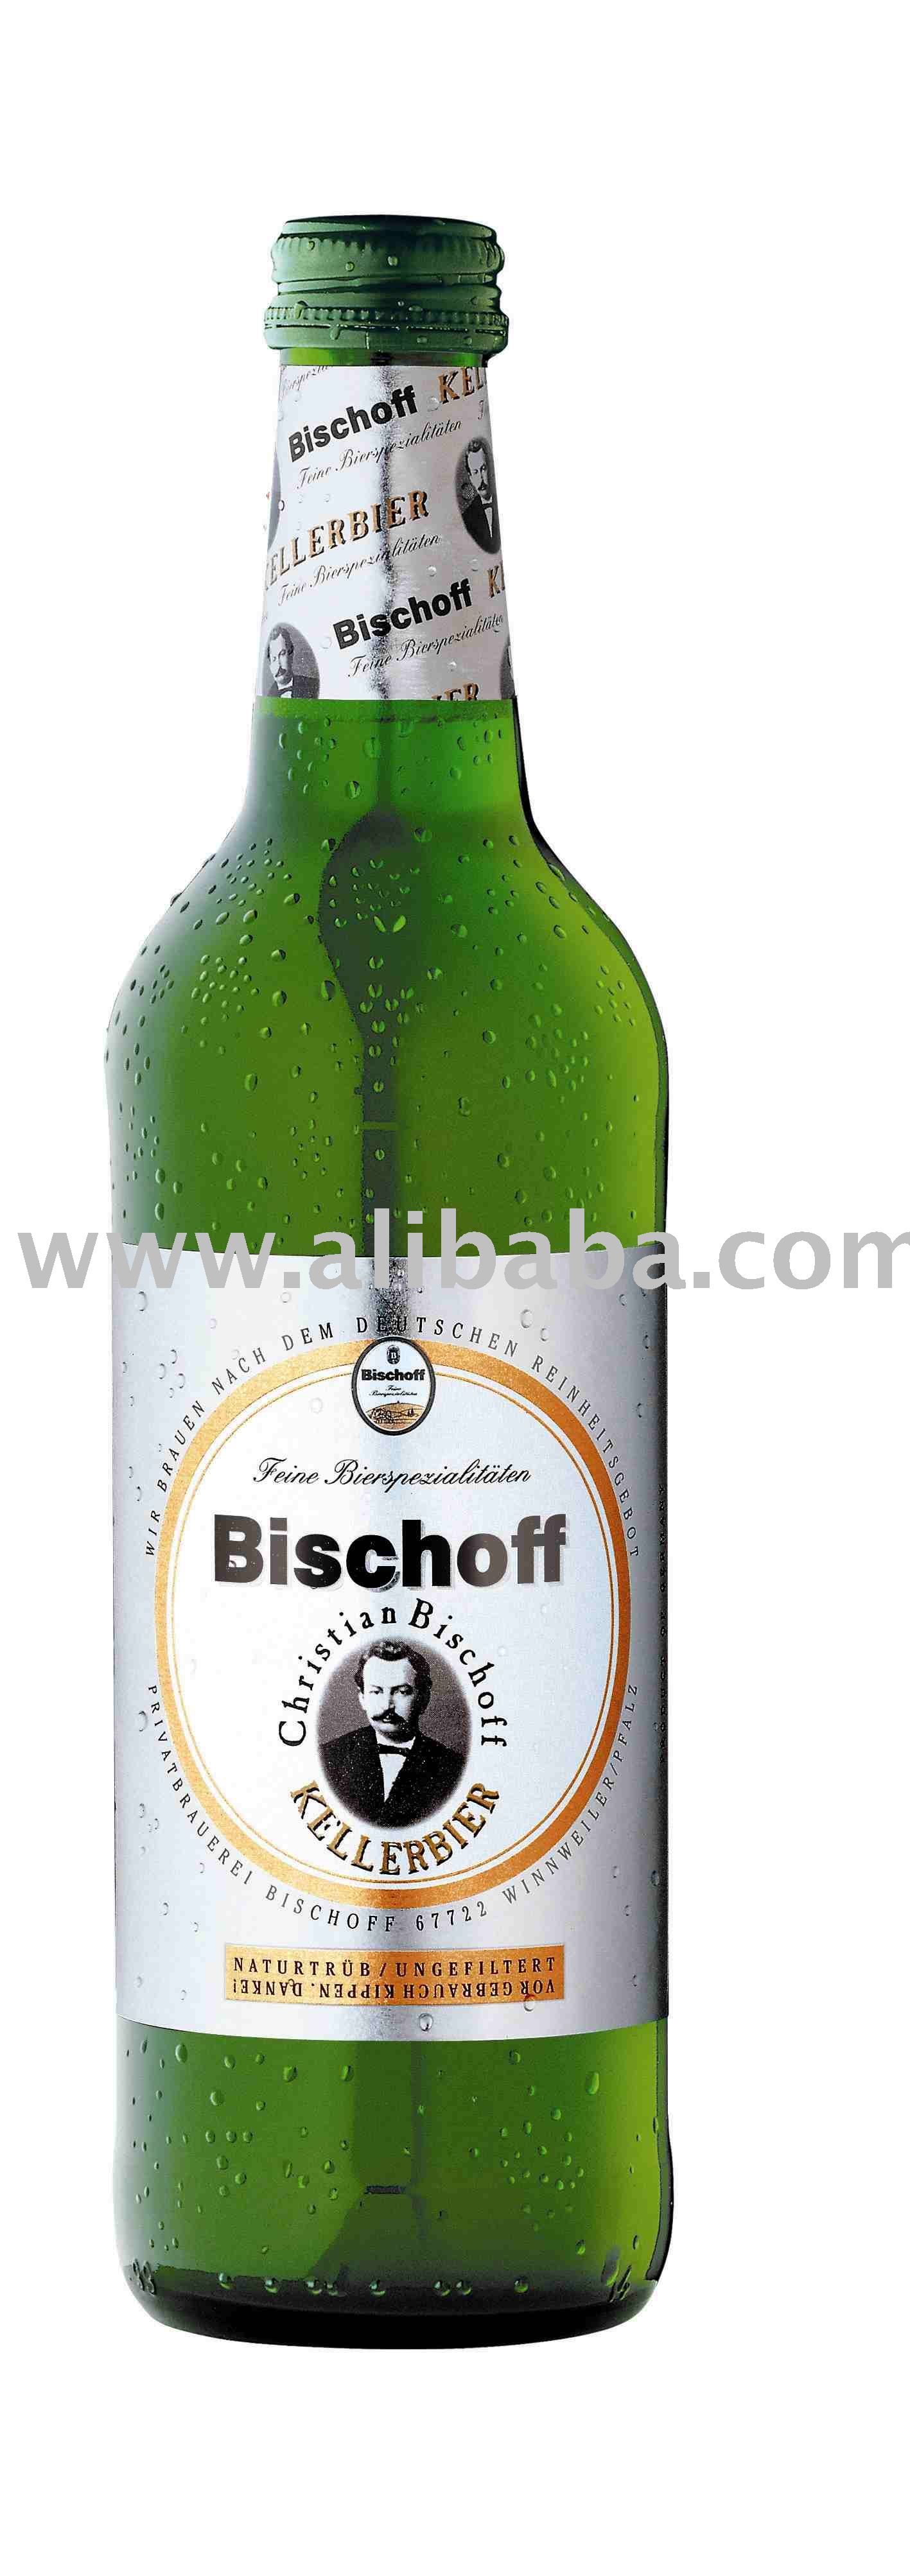 Bischoff Kellerbier / cloudy beer